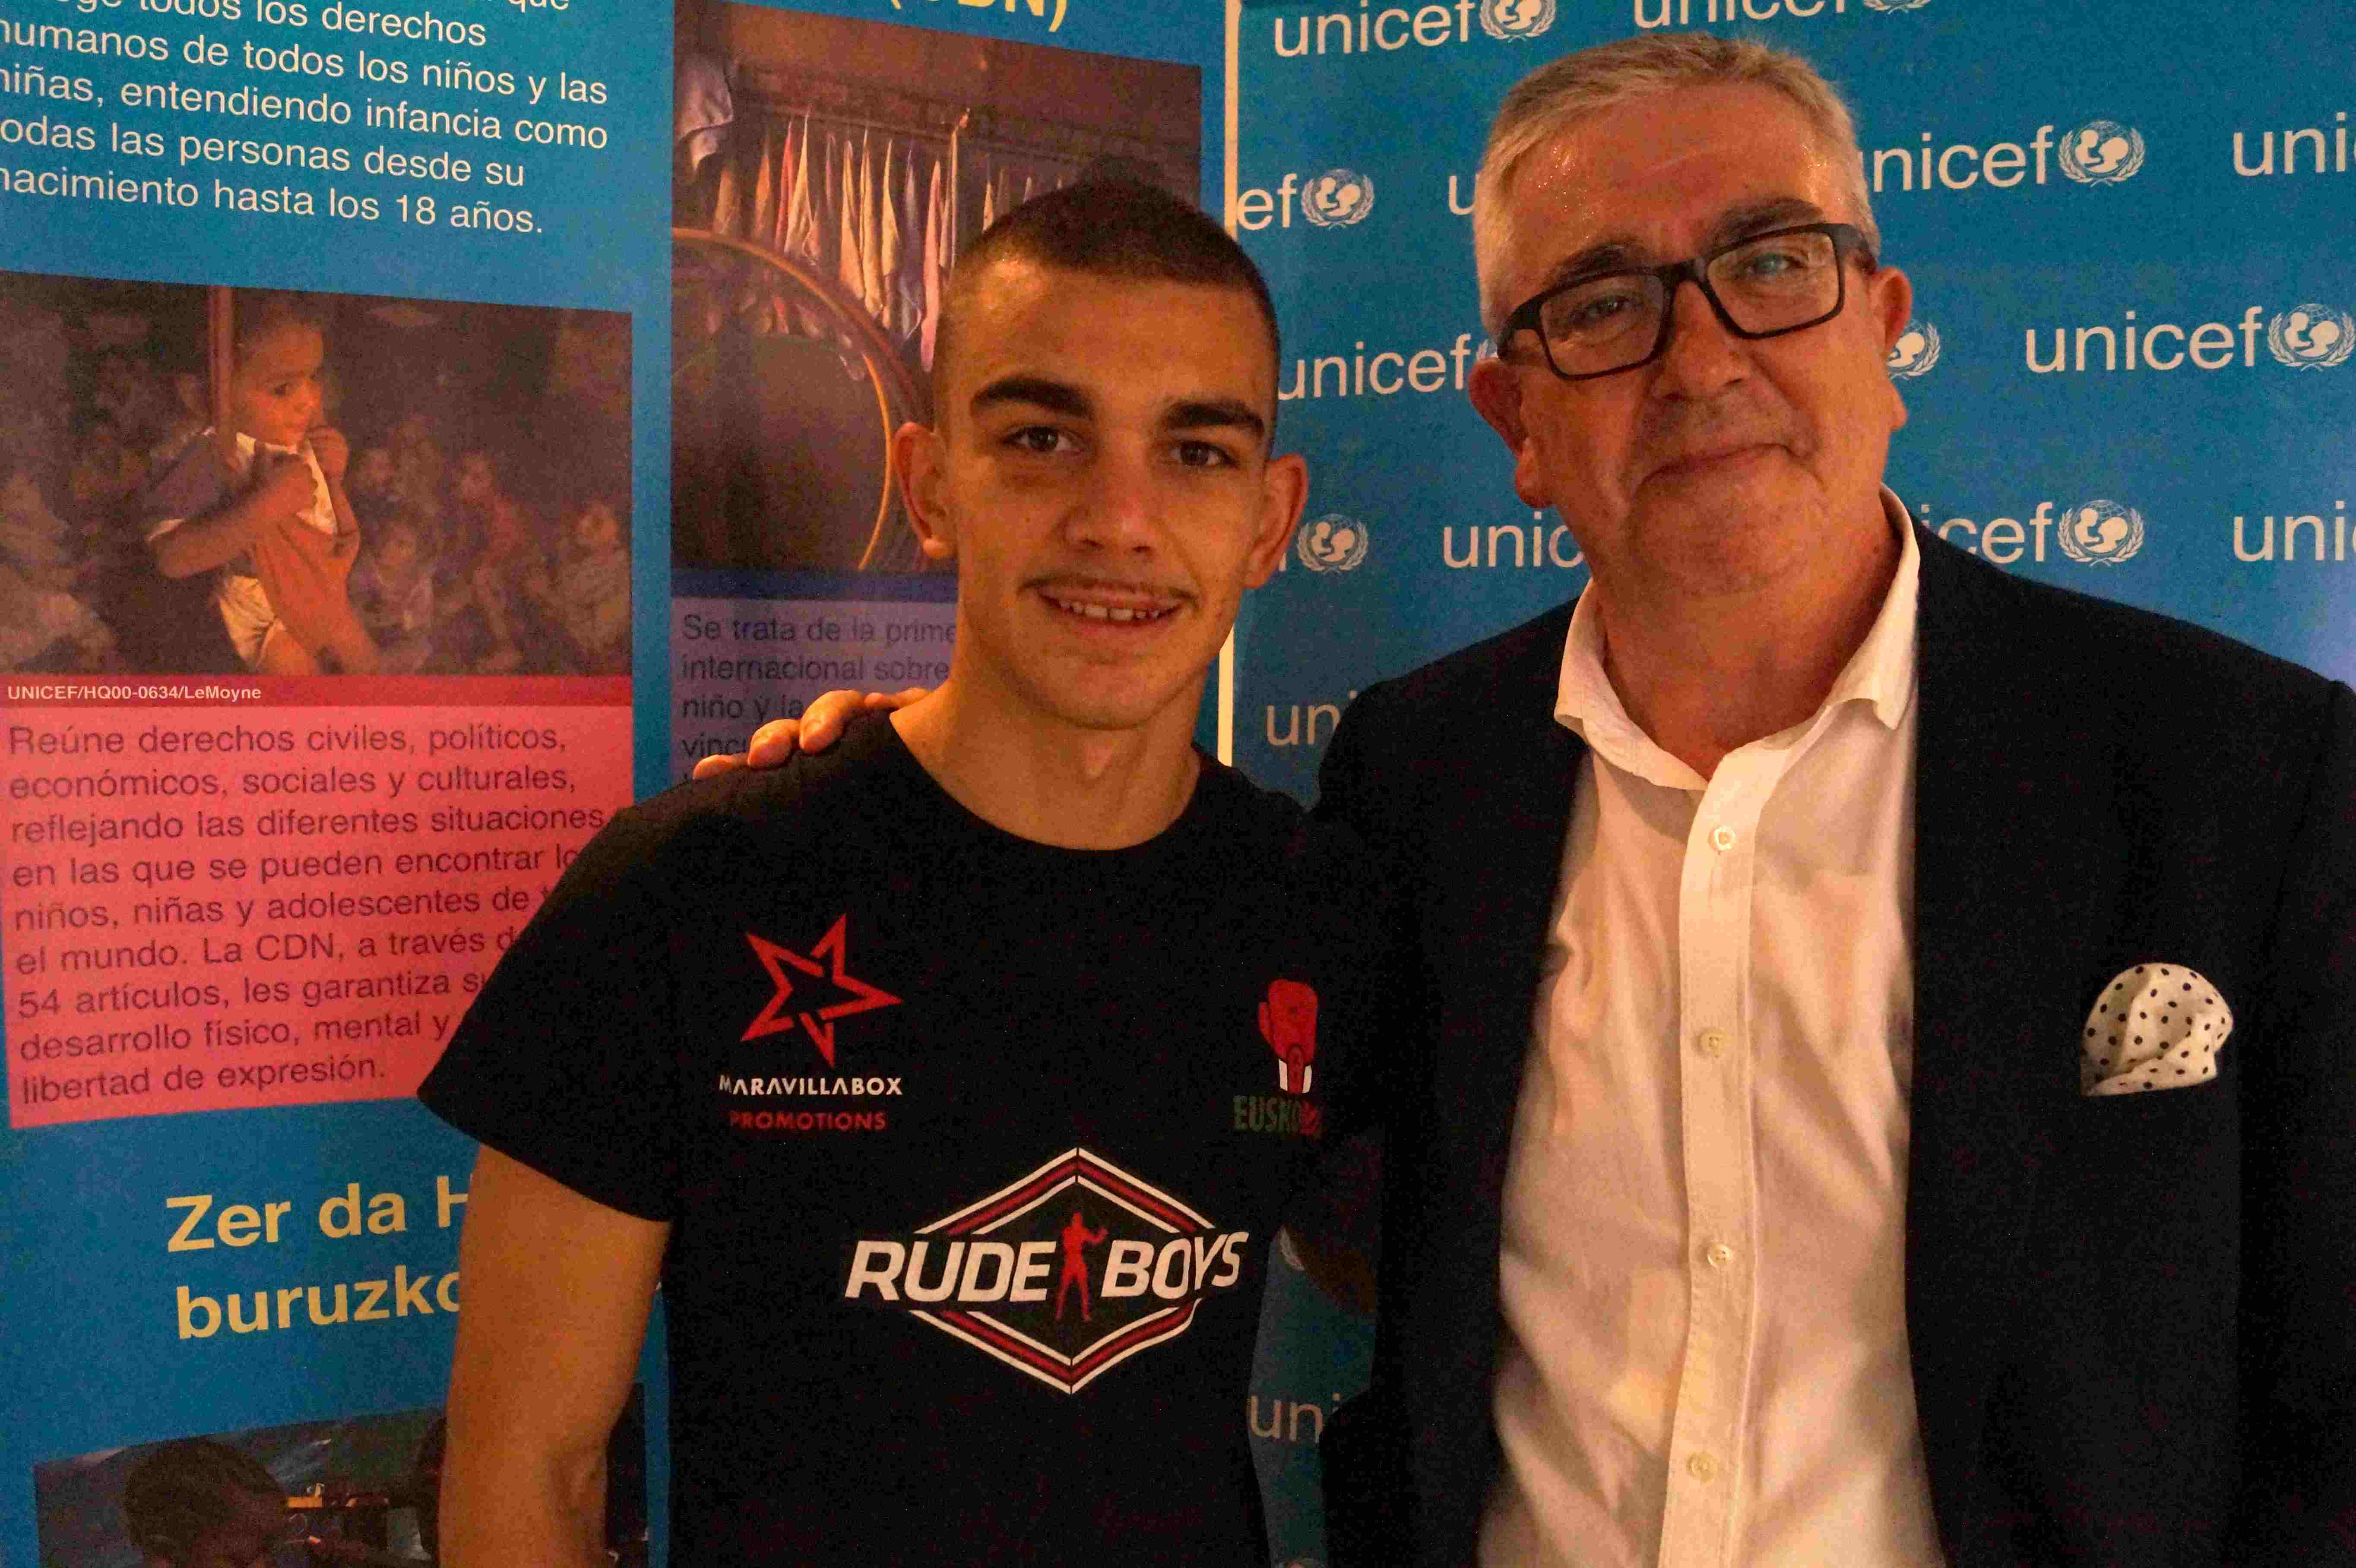 El boxeador Jon Fernández junto al presidente de UNICEF Comité País Vasco, señor Isidro Elezgarai